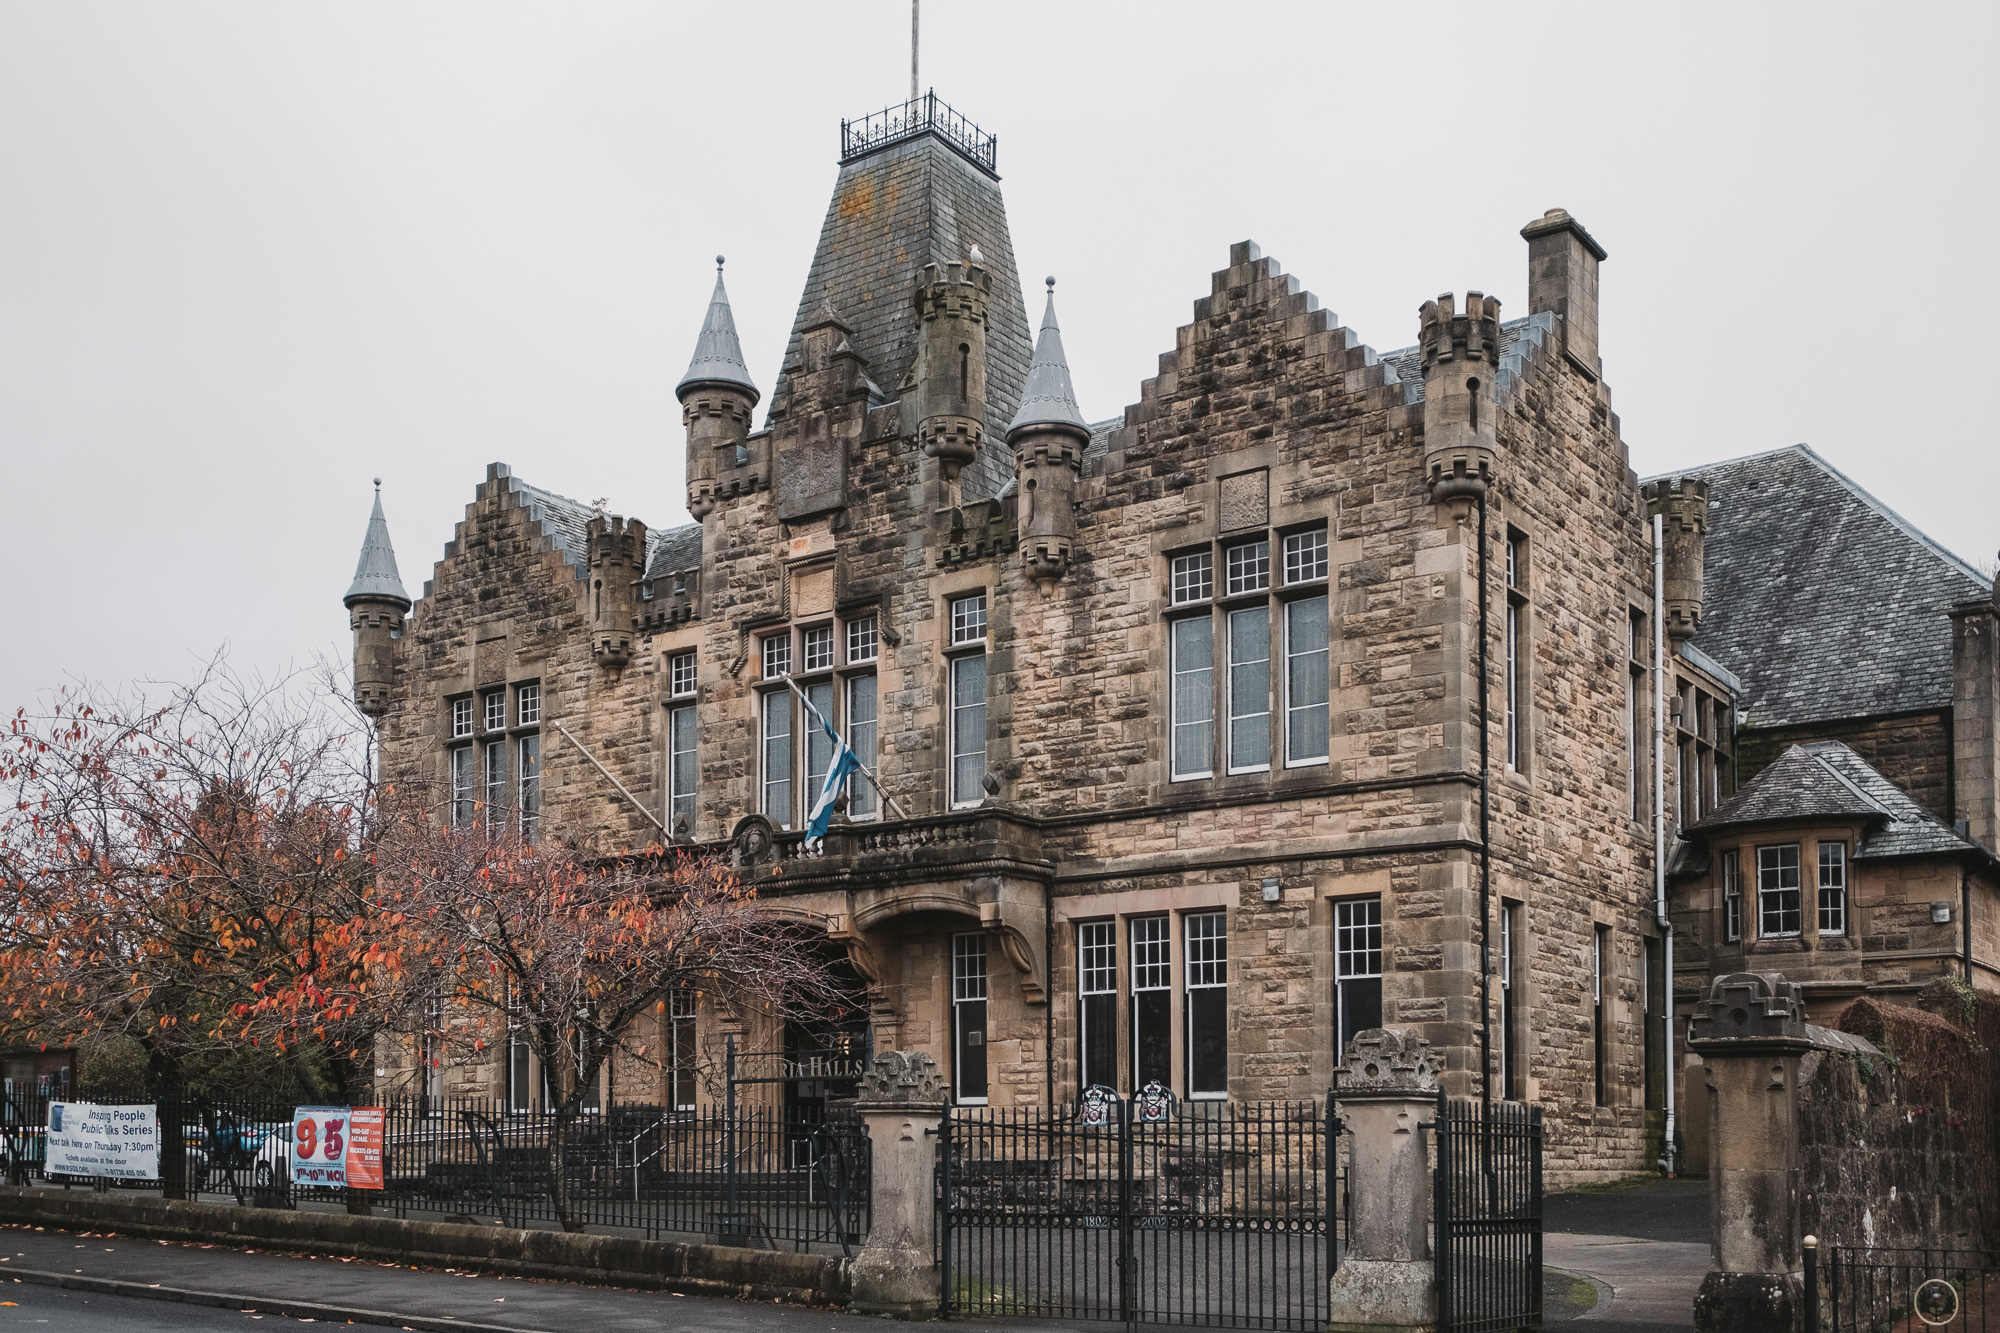 Victoria Halls in Scottish Baronial style